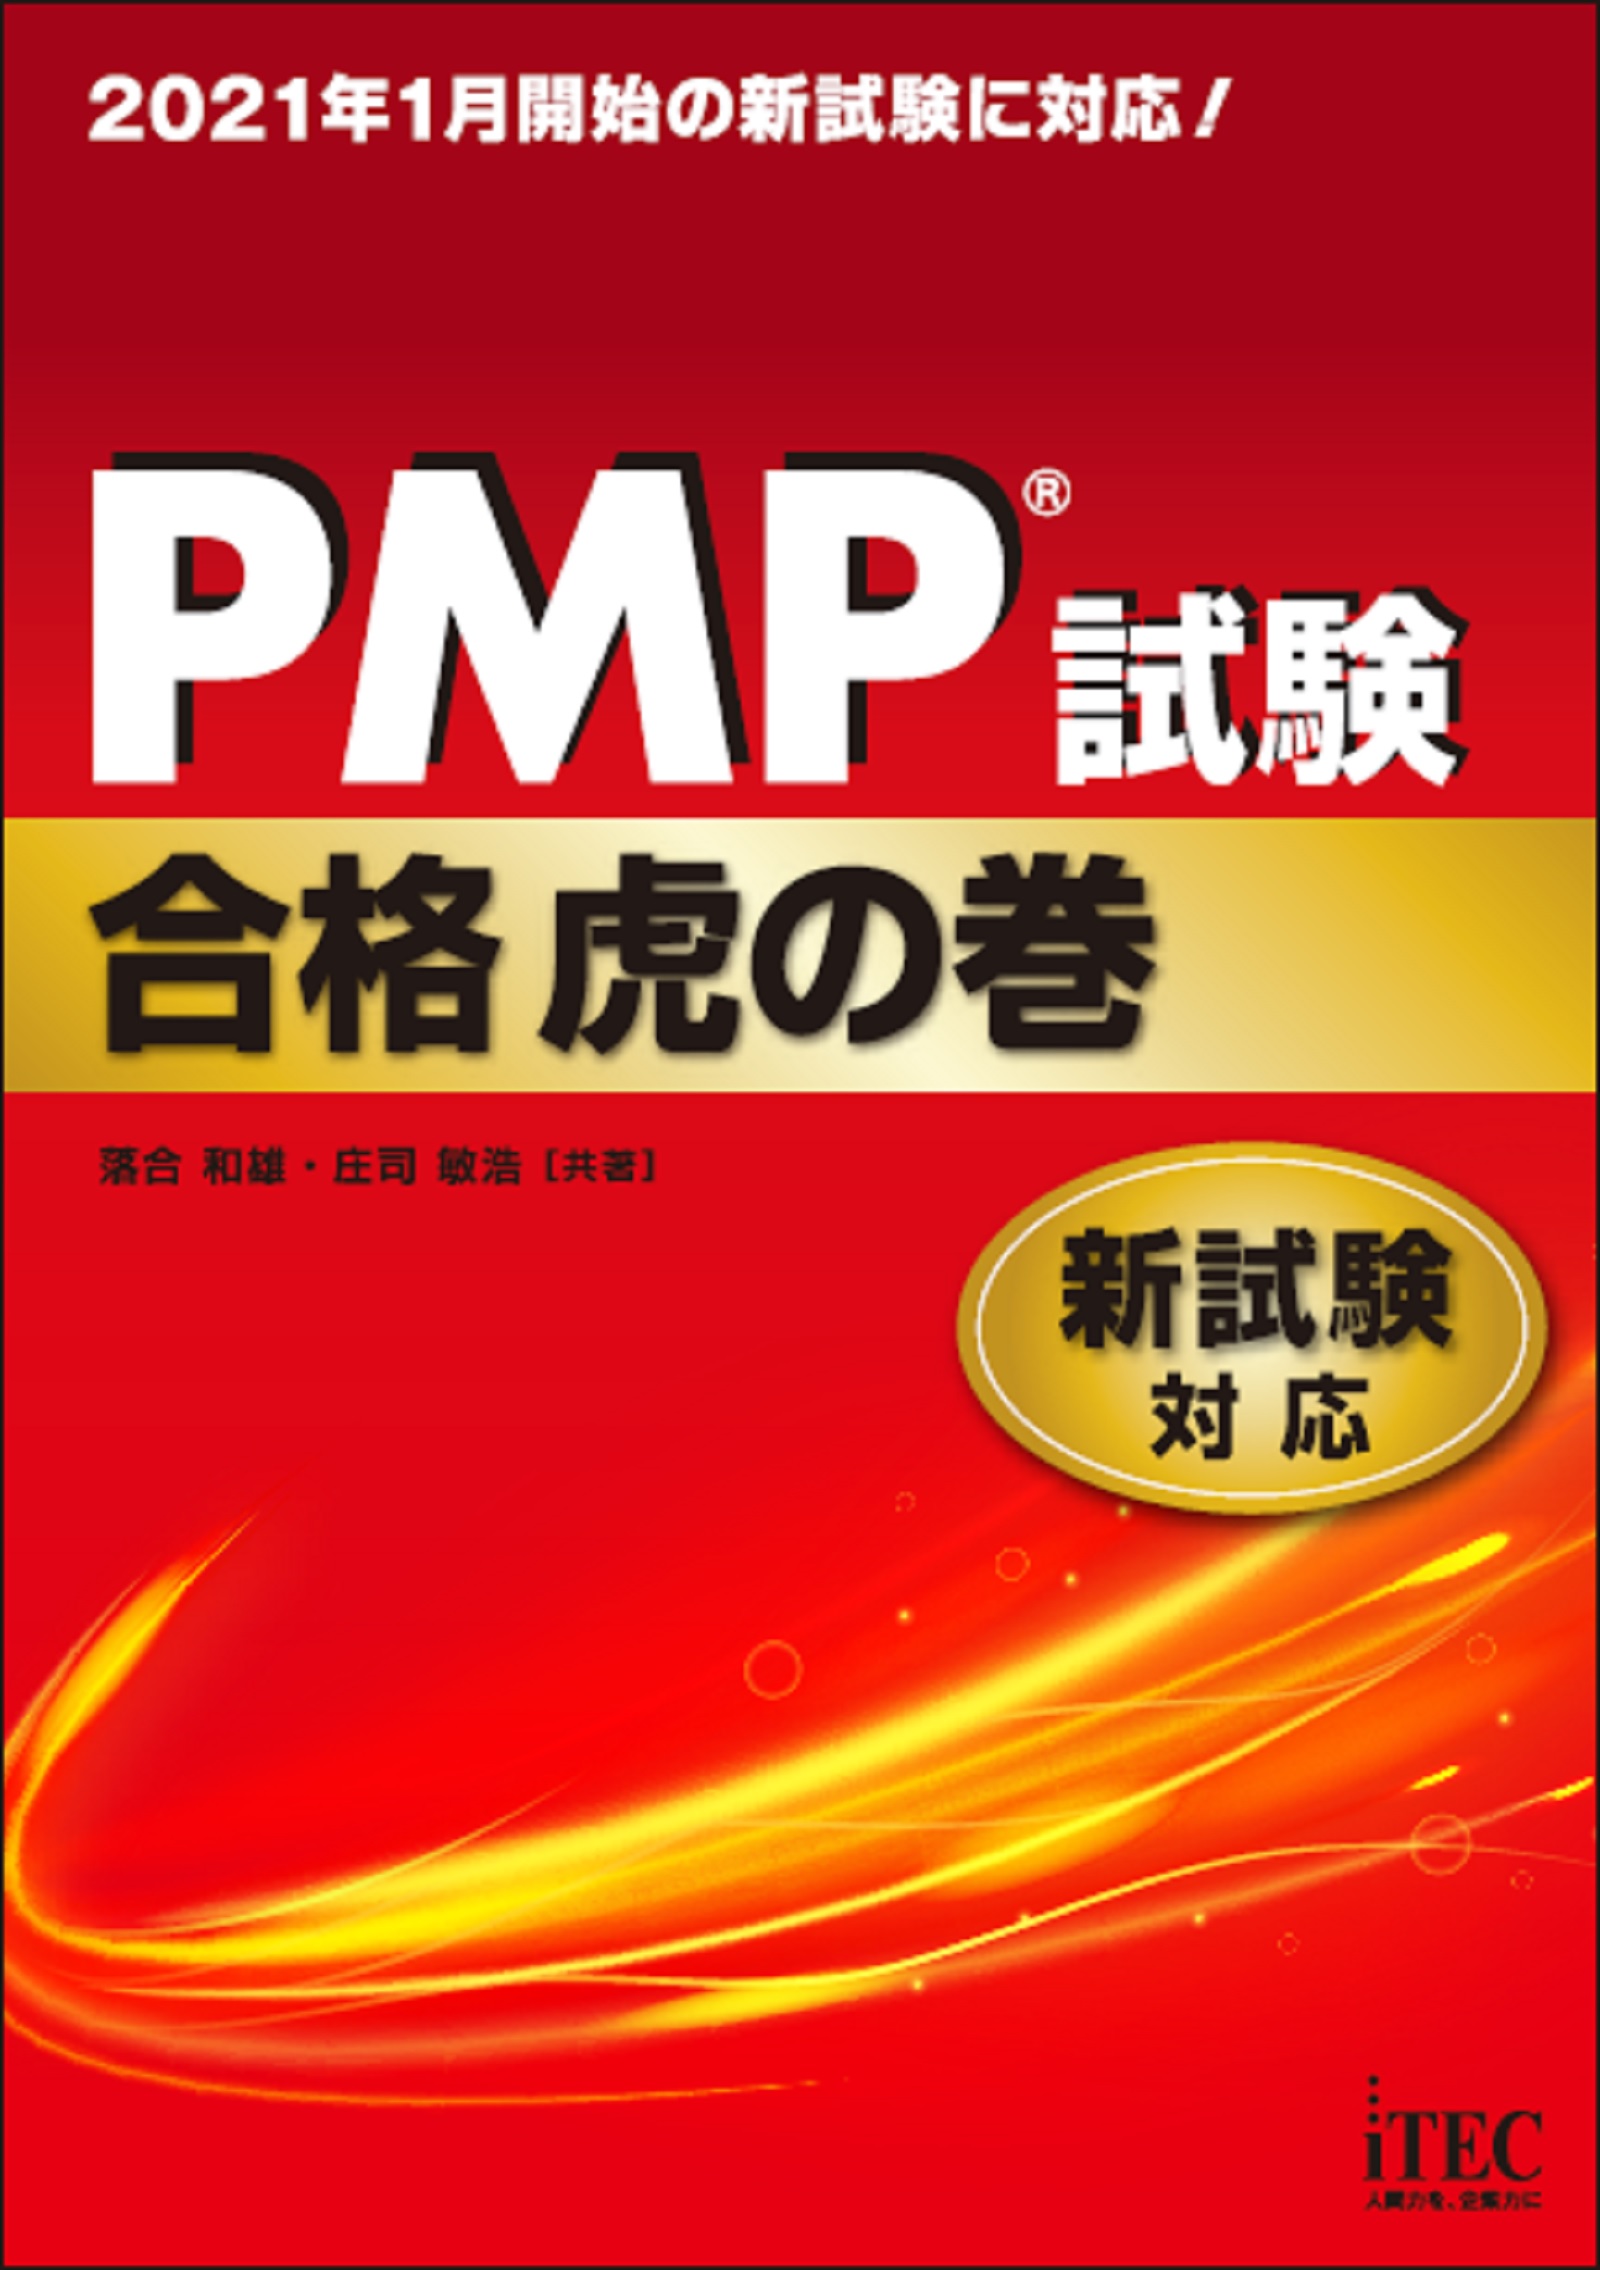 PMP®試験合格虎の巻 新試験対応 - 落合和雄/庄司敏浩 - 漫画・ラノベ